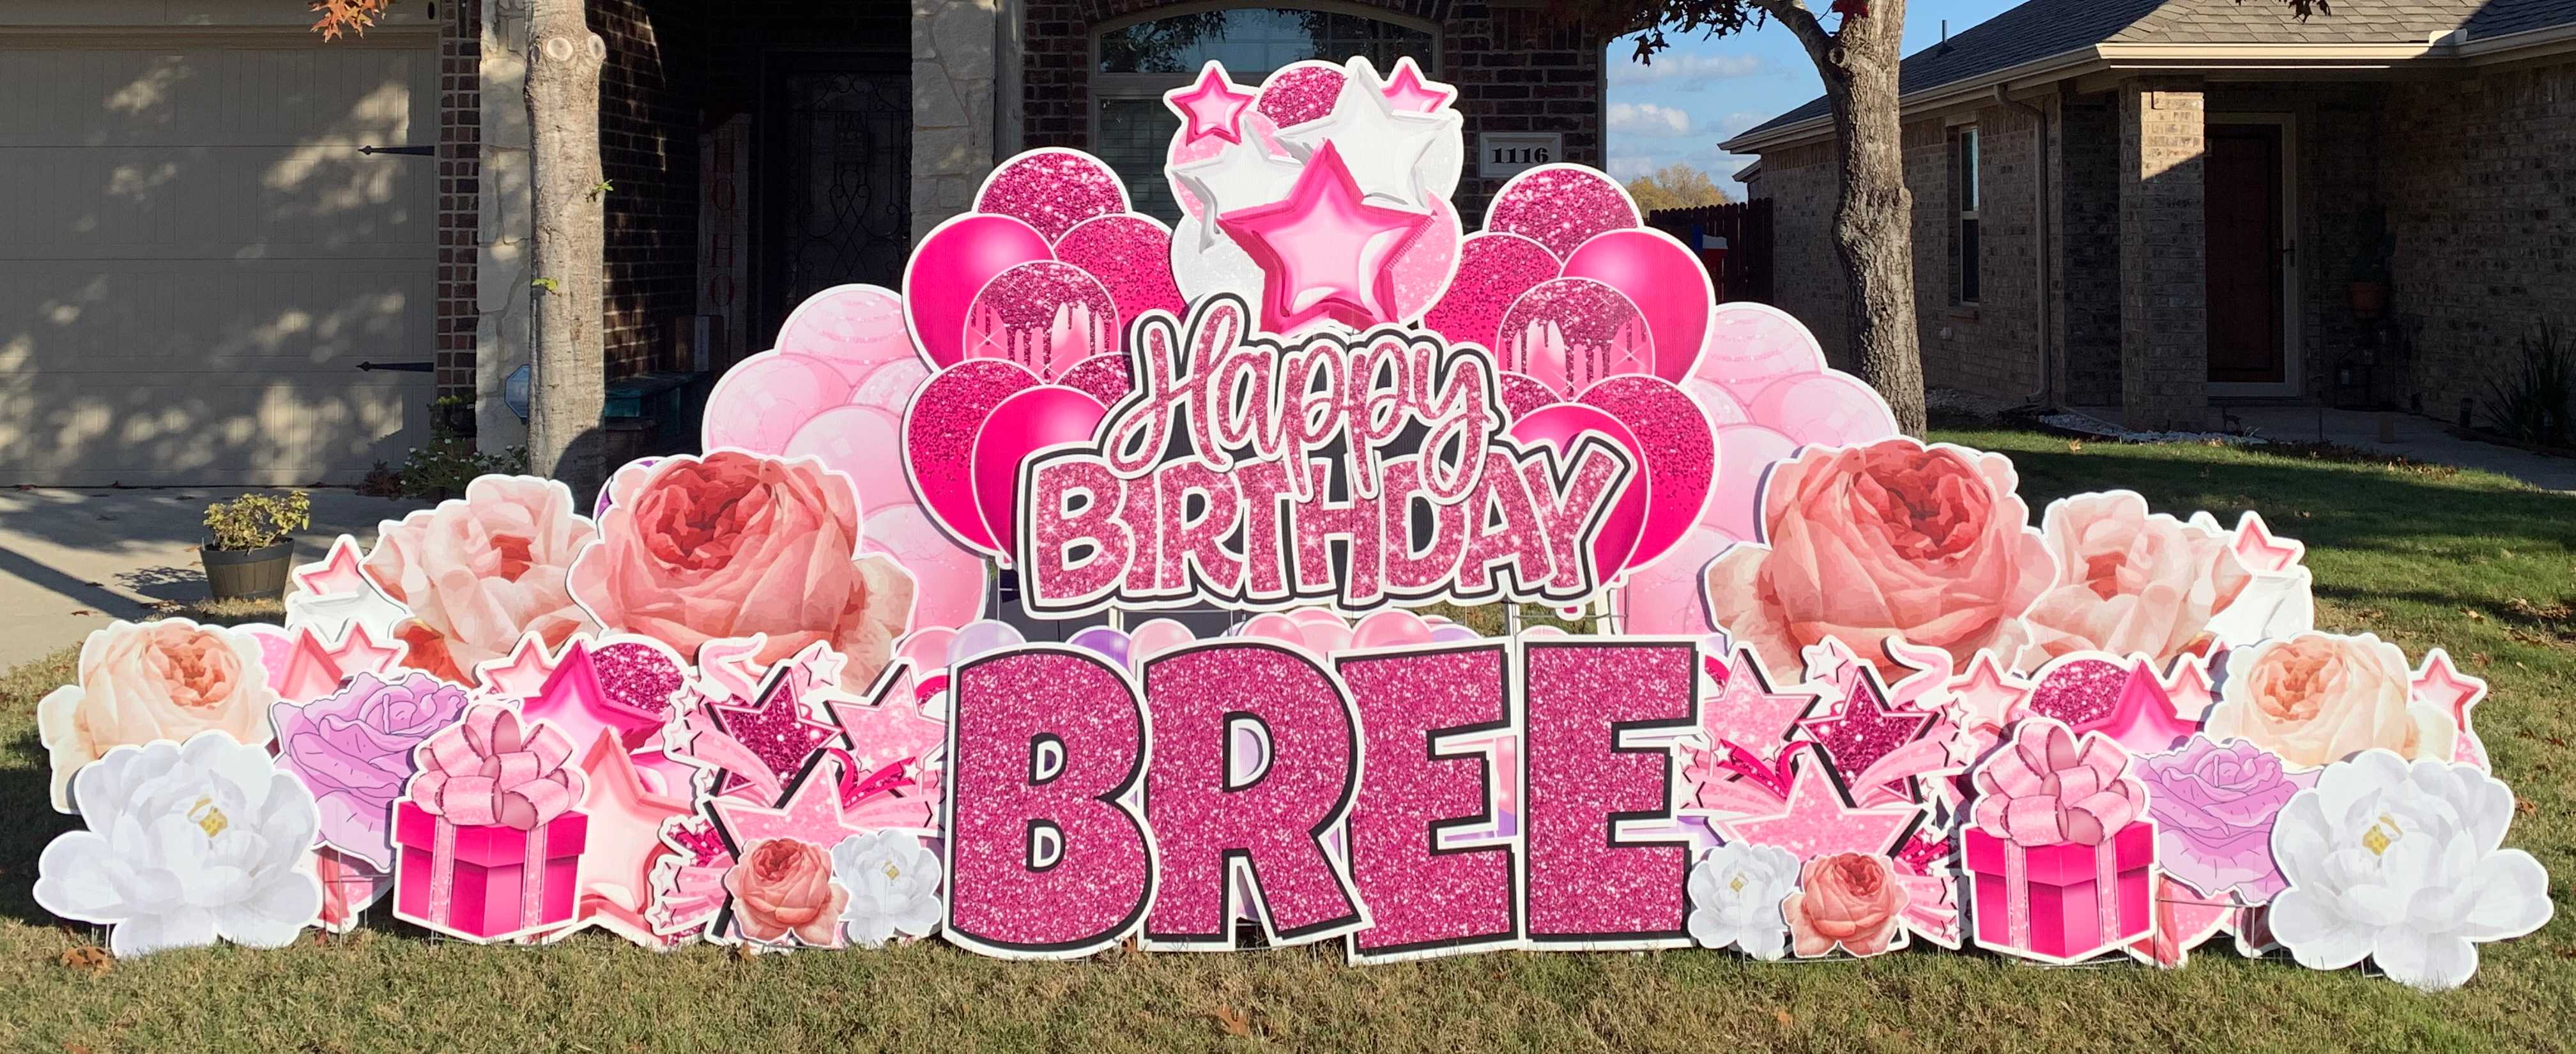 Yard card sign happy birthday bree 